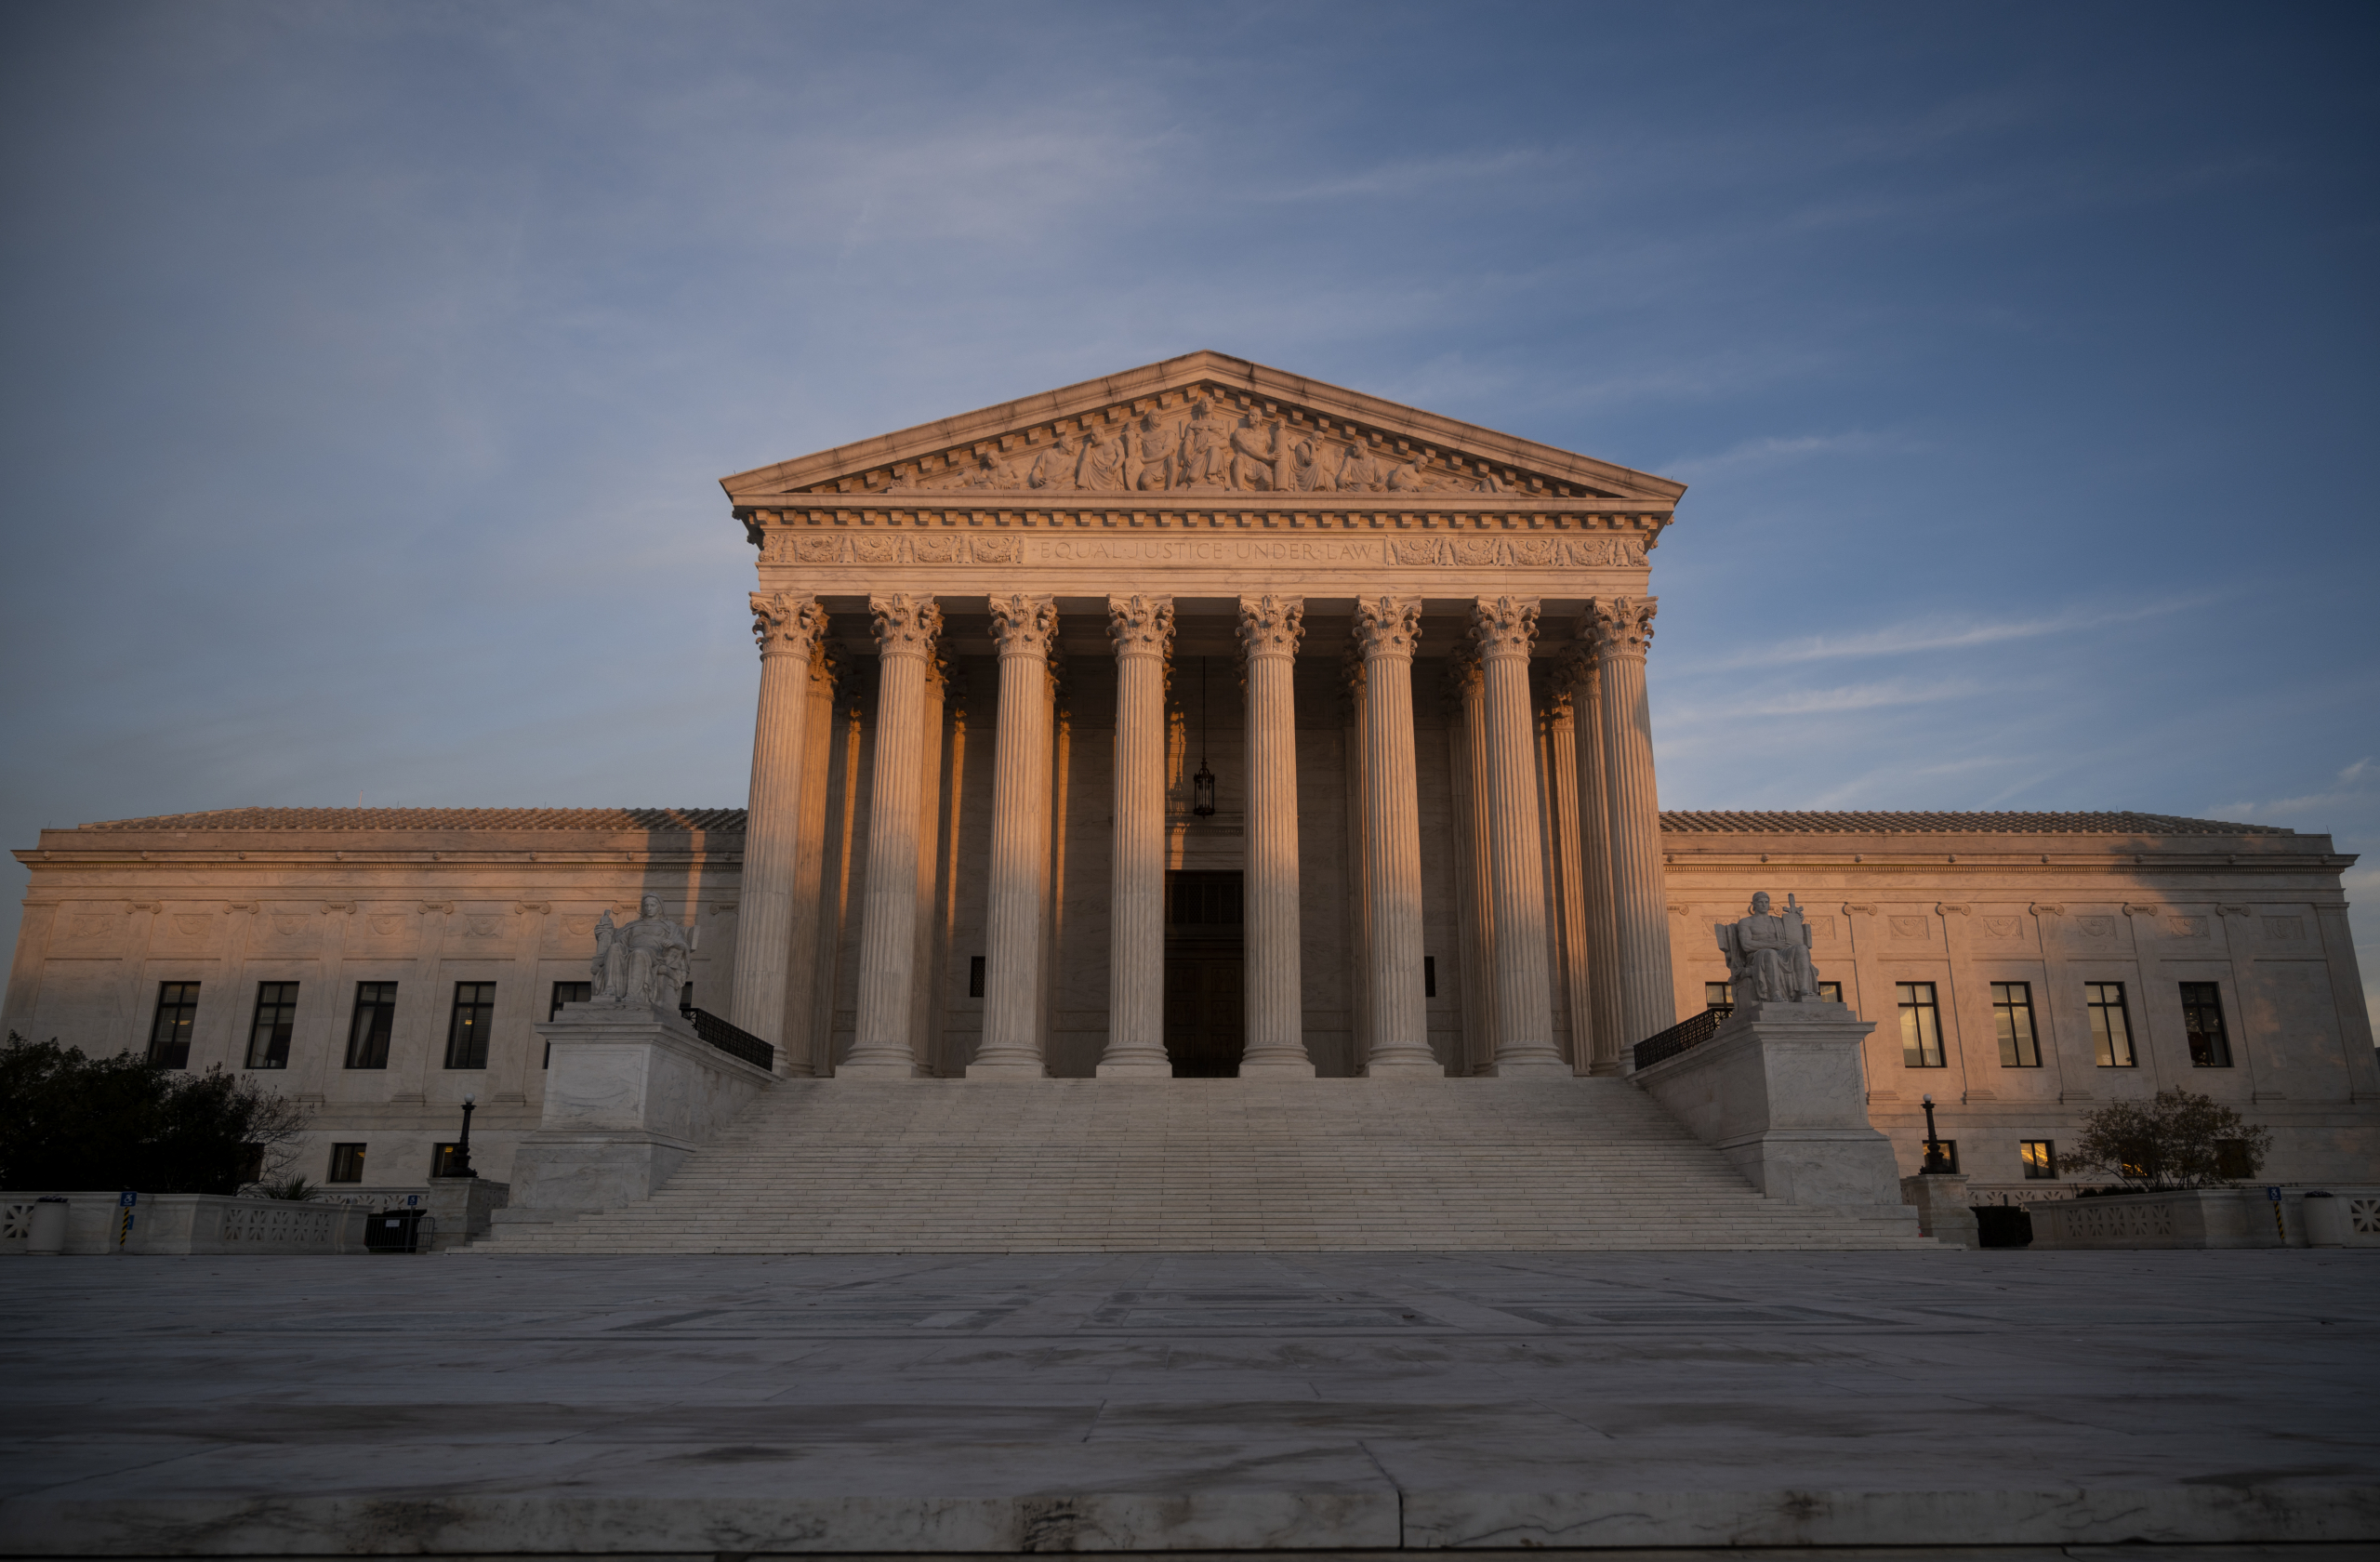 Final Report on SCOTUS Reform Released – READ IN FULL